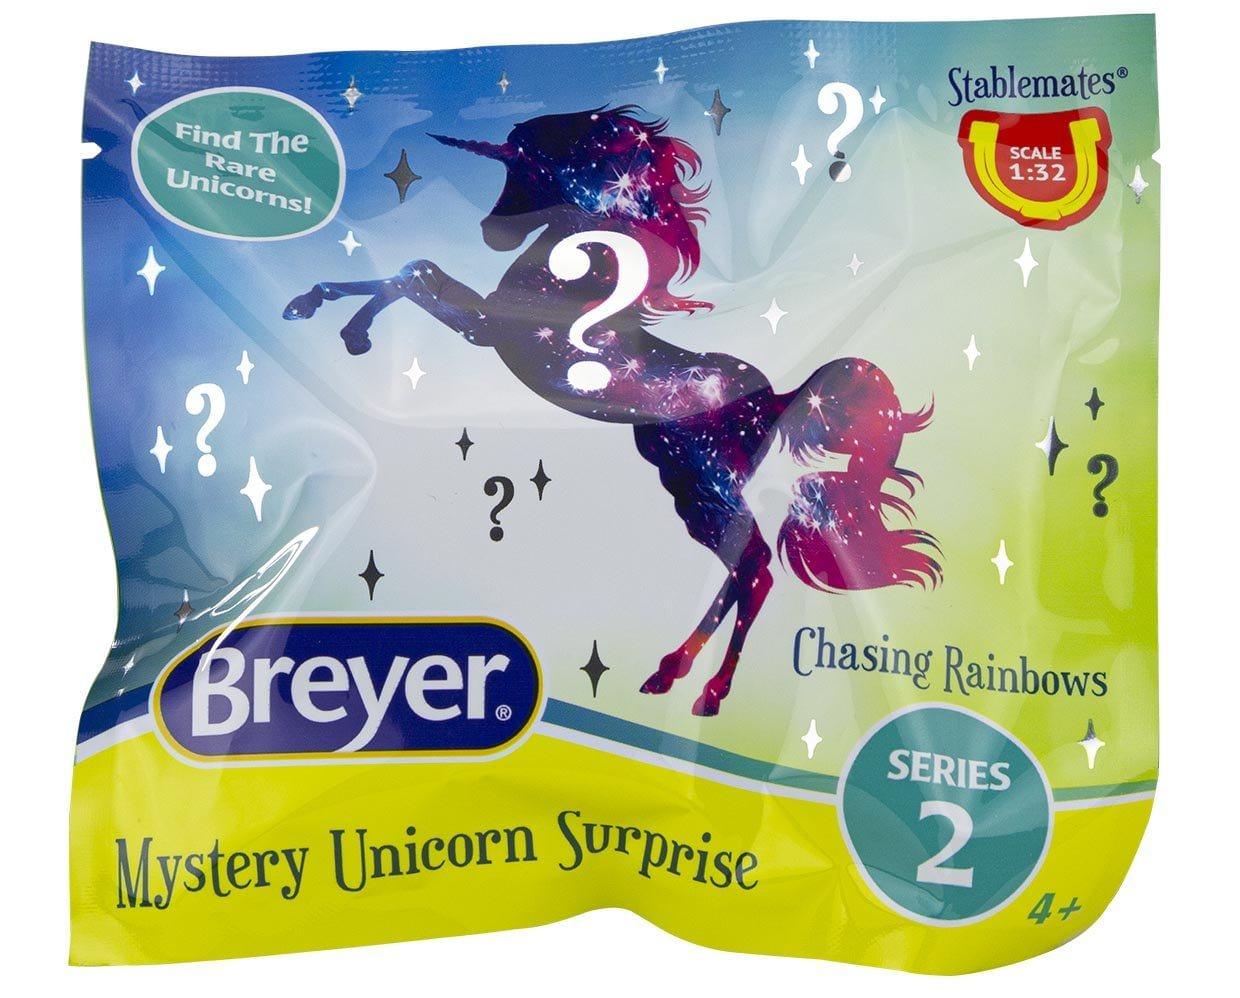 Breyer Mystery Unicorn Surprise Chasing Rainbows Blind Bag | One Random